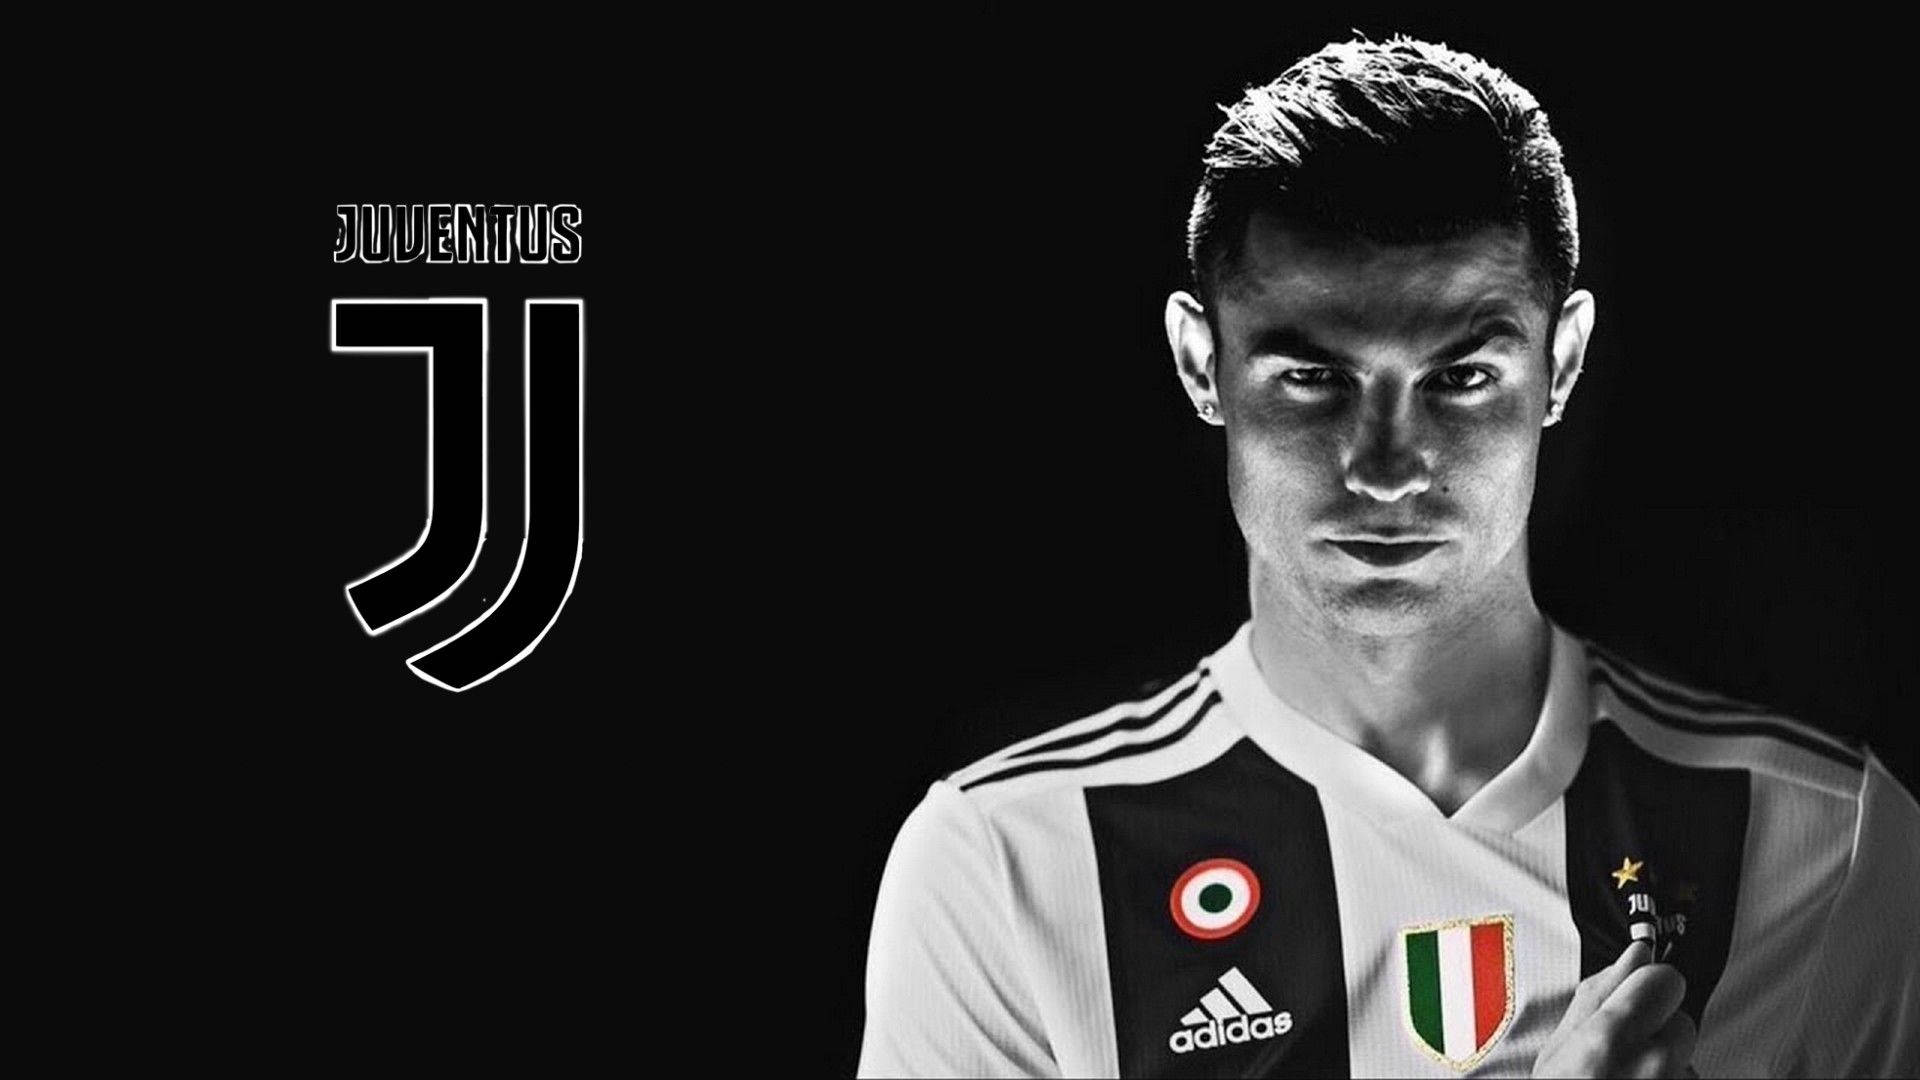 Juventus World's Mvp Cristiano Ronaldo Background